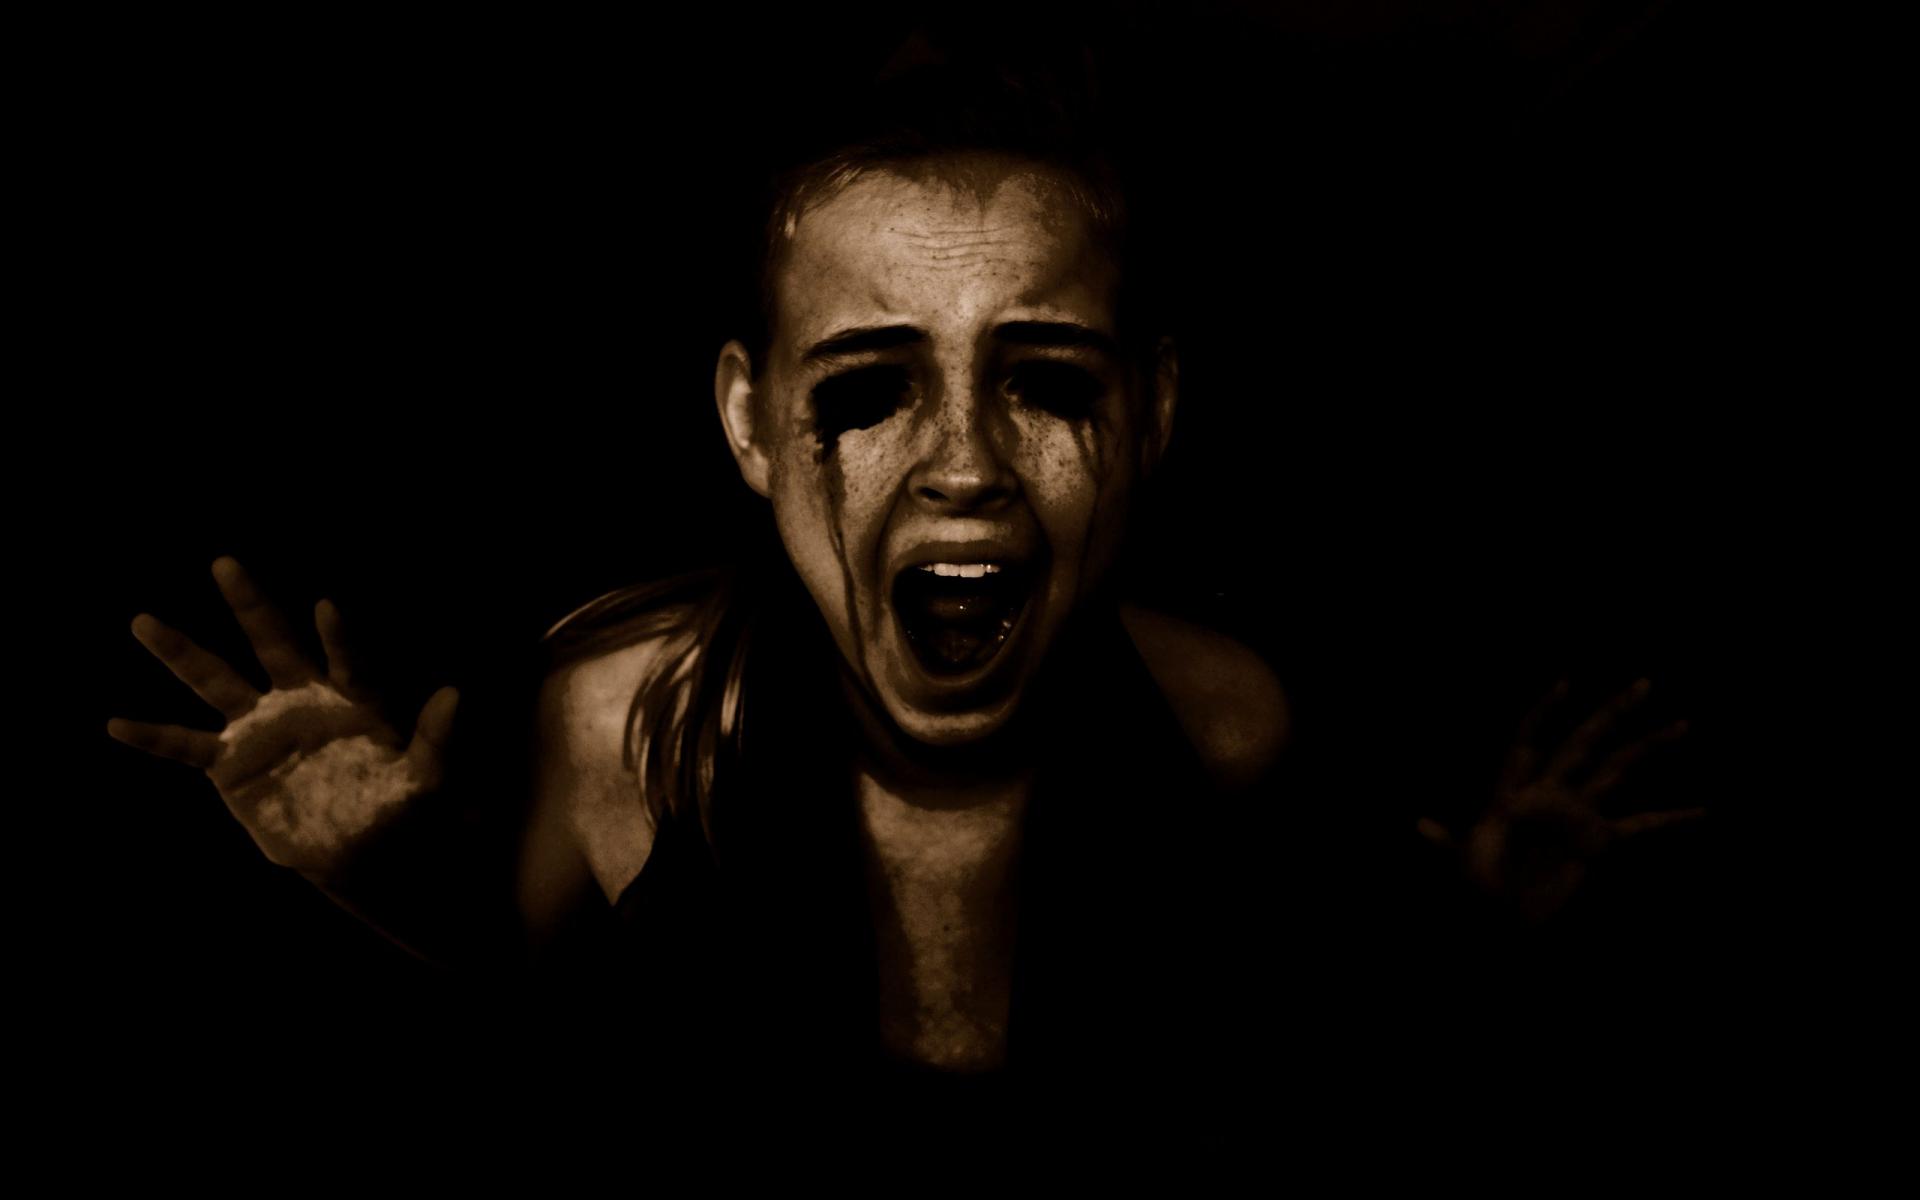 Dark Horror Evil Scary Creepy Spooky Halloween Women Girls Blood